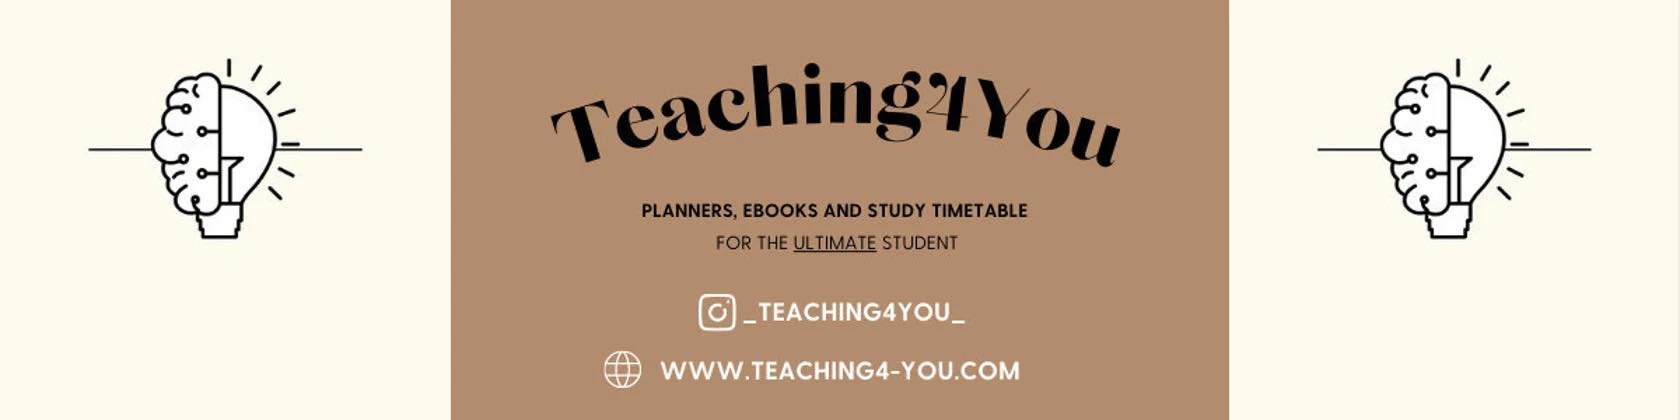 Teaching4you